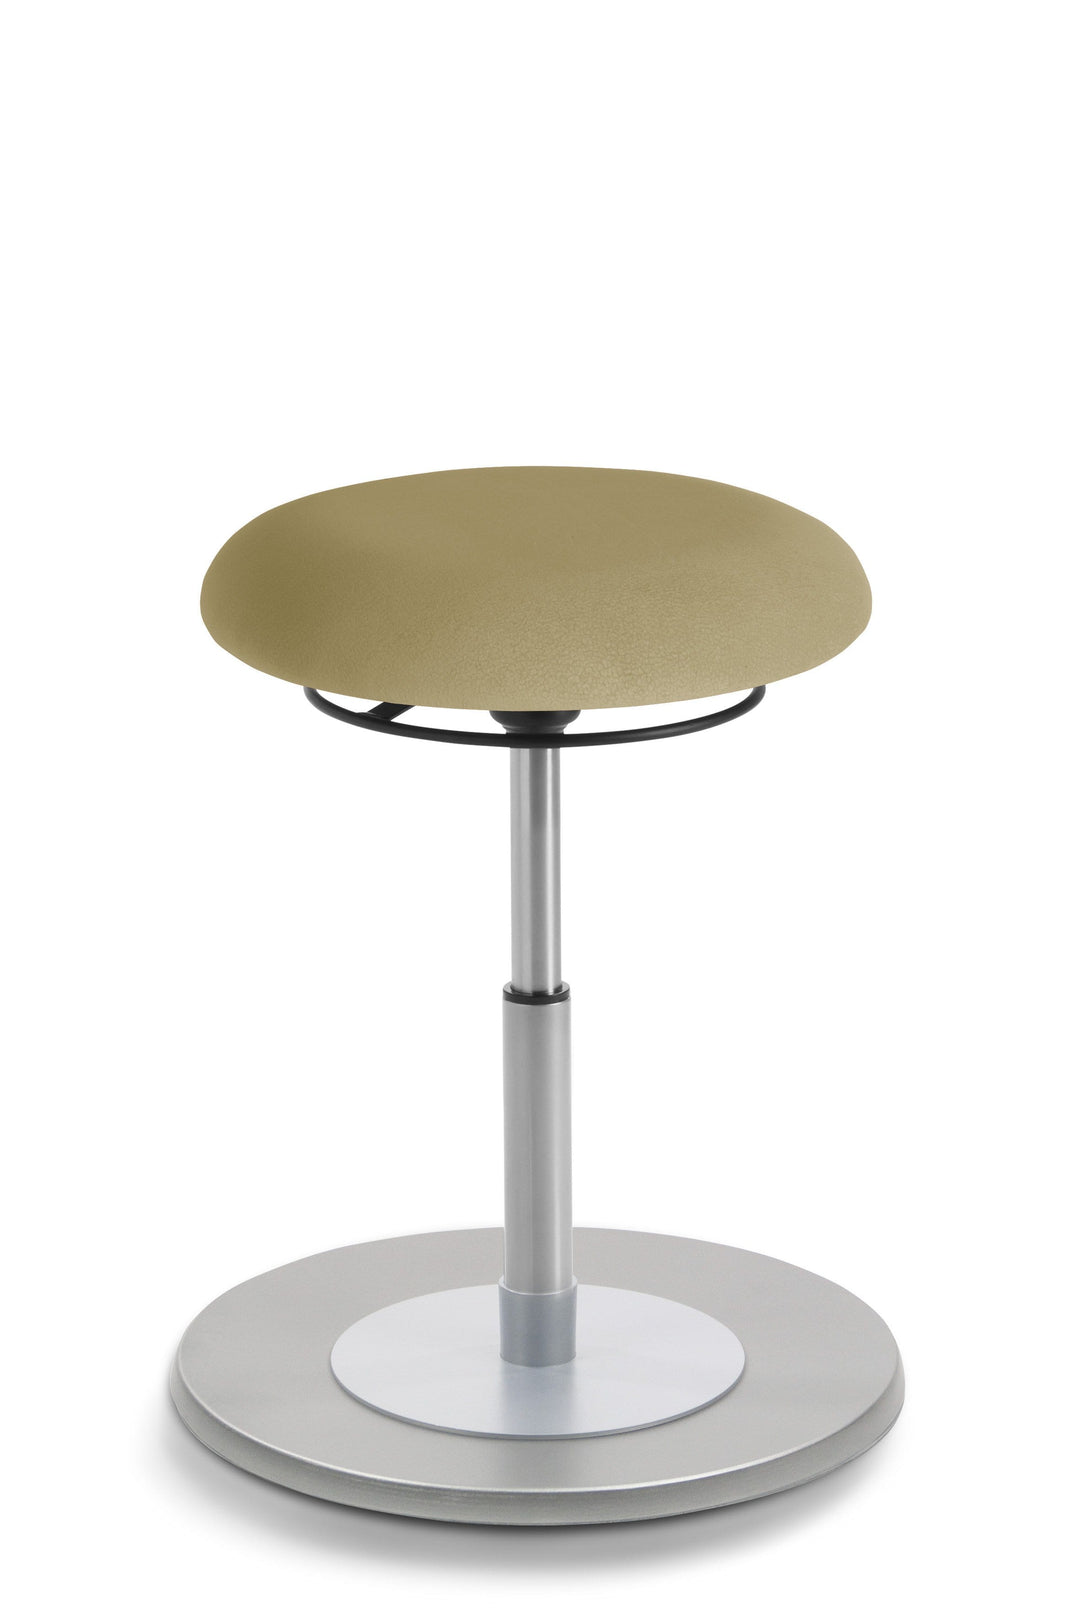 Mayer MyErgosit Taboret Krzesło Stołek balansujący okrągły 39-52cm podstawa srebrna 1151 EF - 4kidspoint.pl